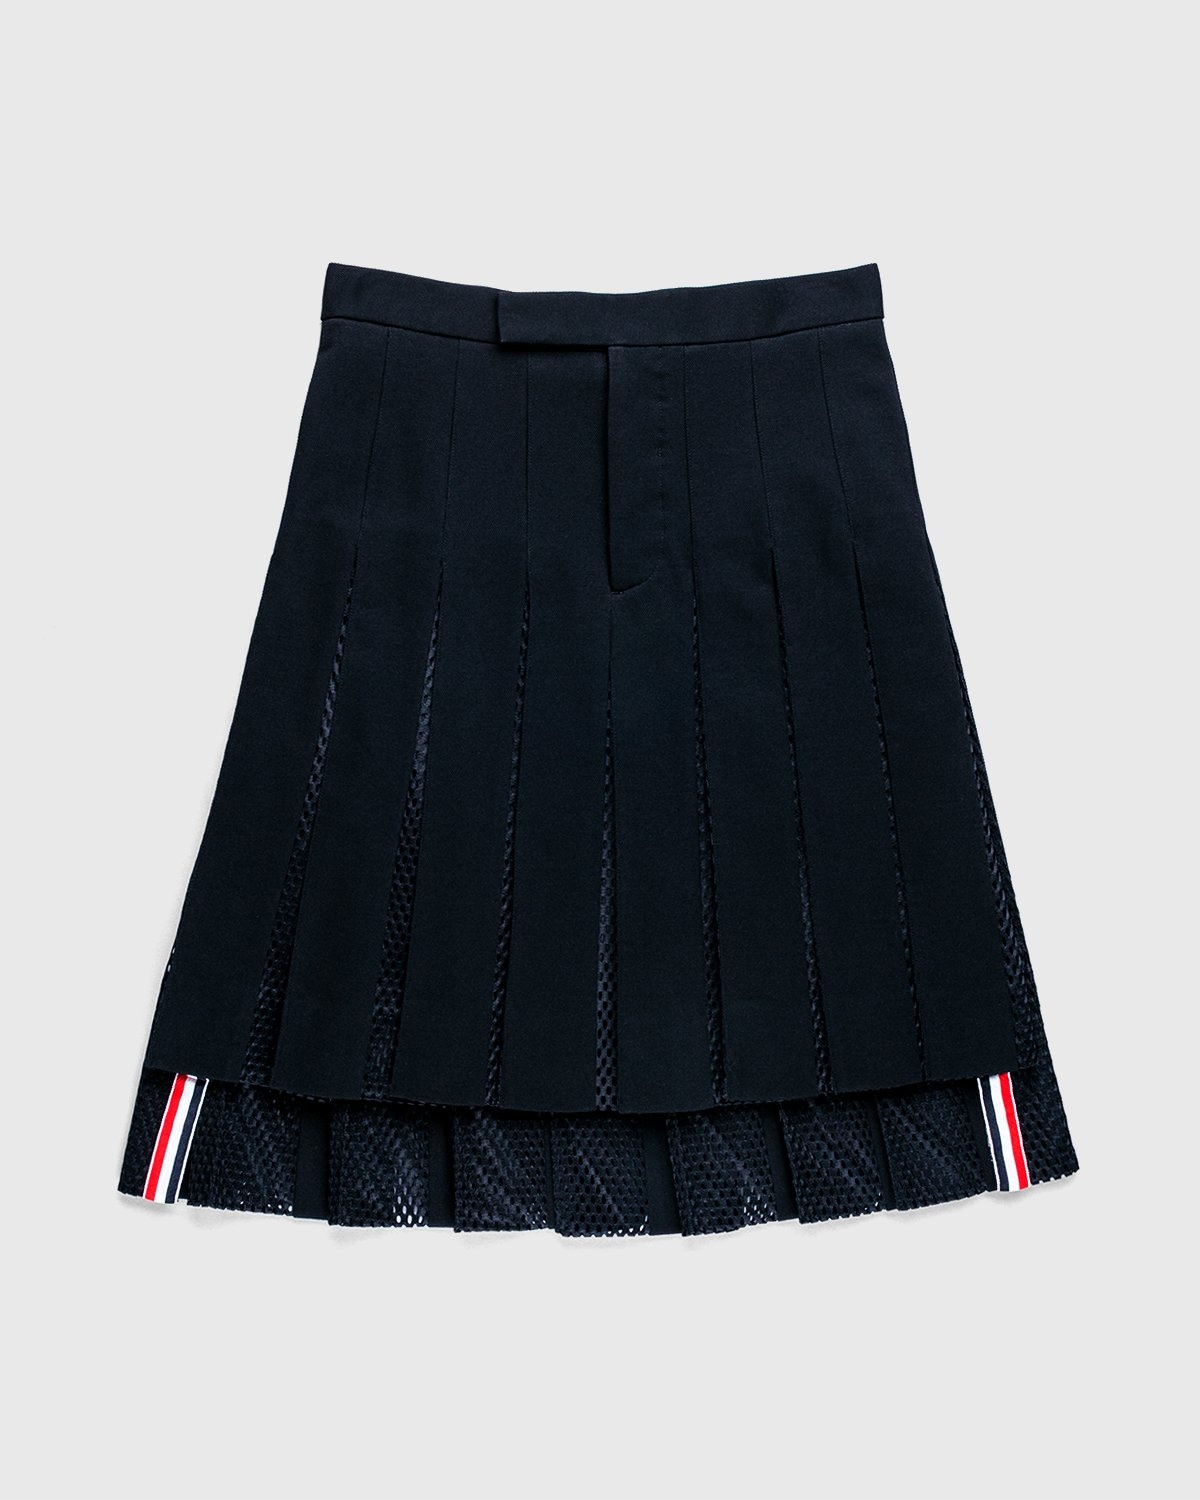 Thom Browne x Highsnobiety – Women’s Pleated Mesh Skirt Black - Suits - Black - Image 1